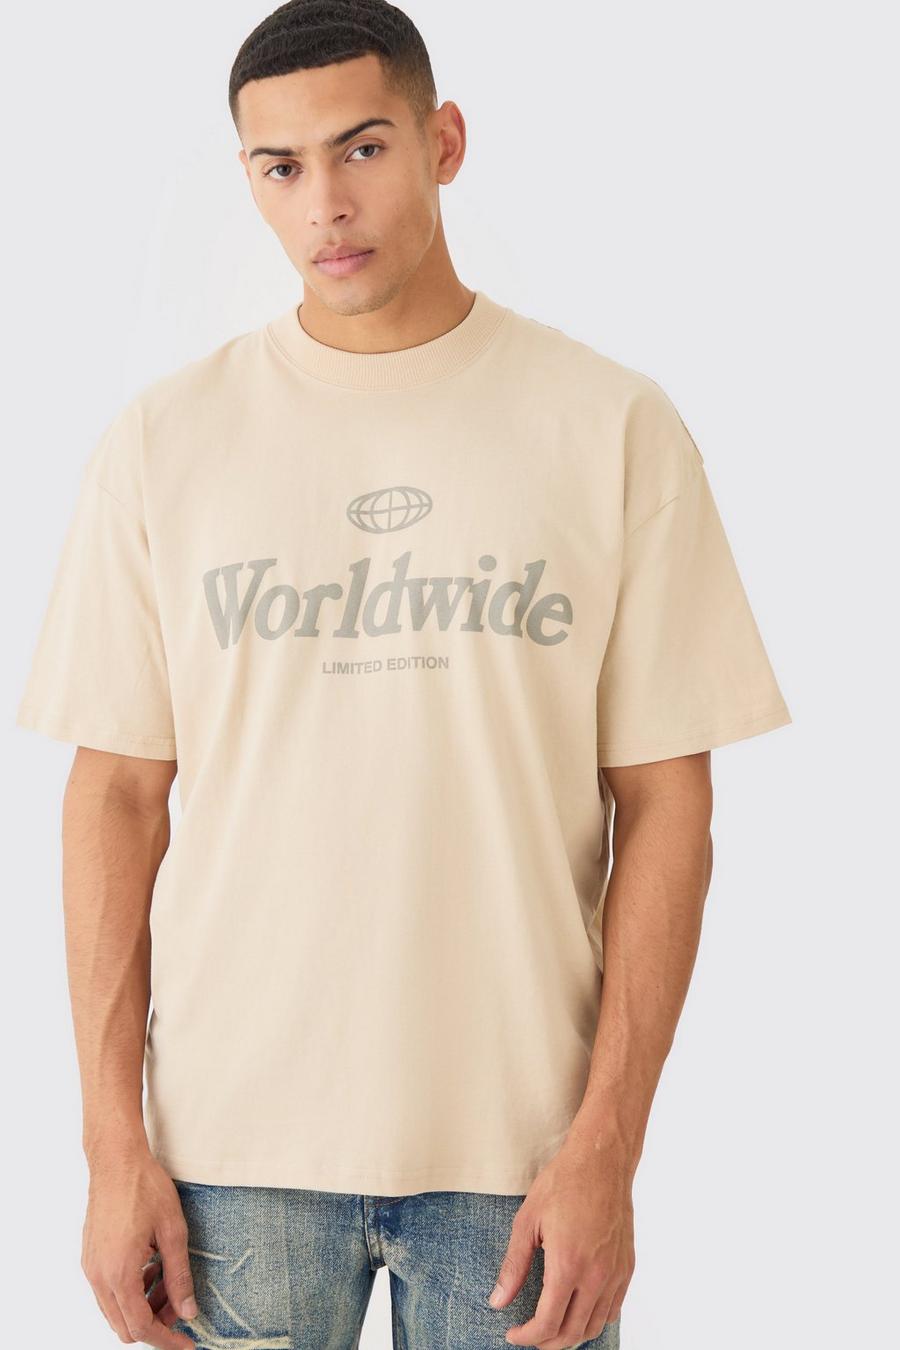 T-shirt oversize à slogan Worldwide, Sand image number 1